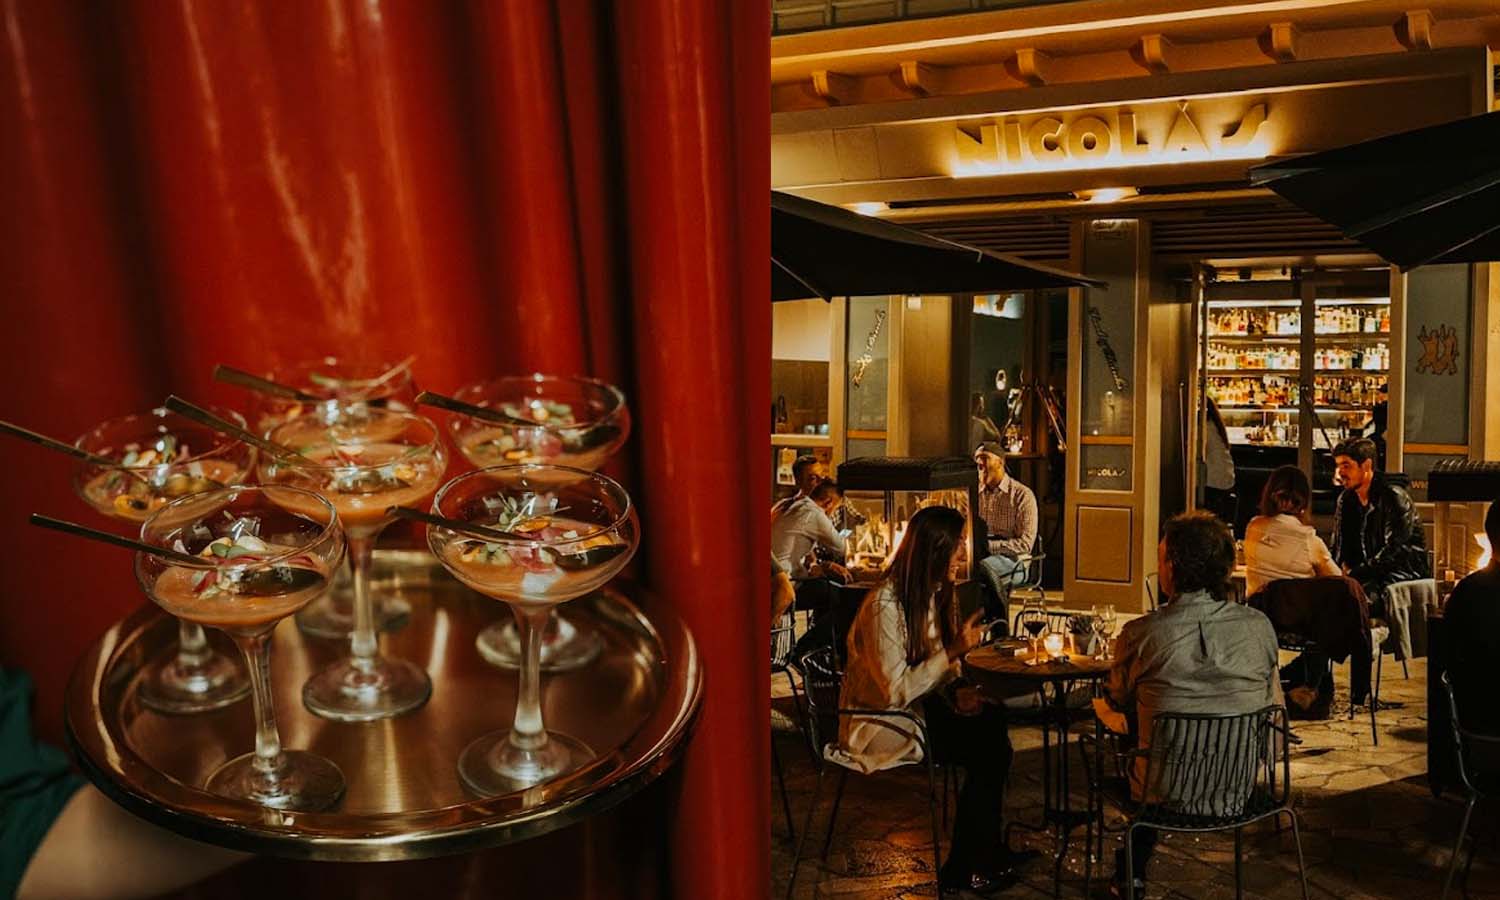 nicolas cocktail bars palma mallorca nakar hotel